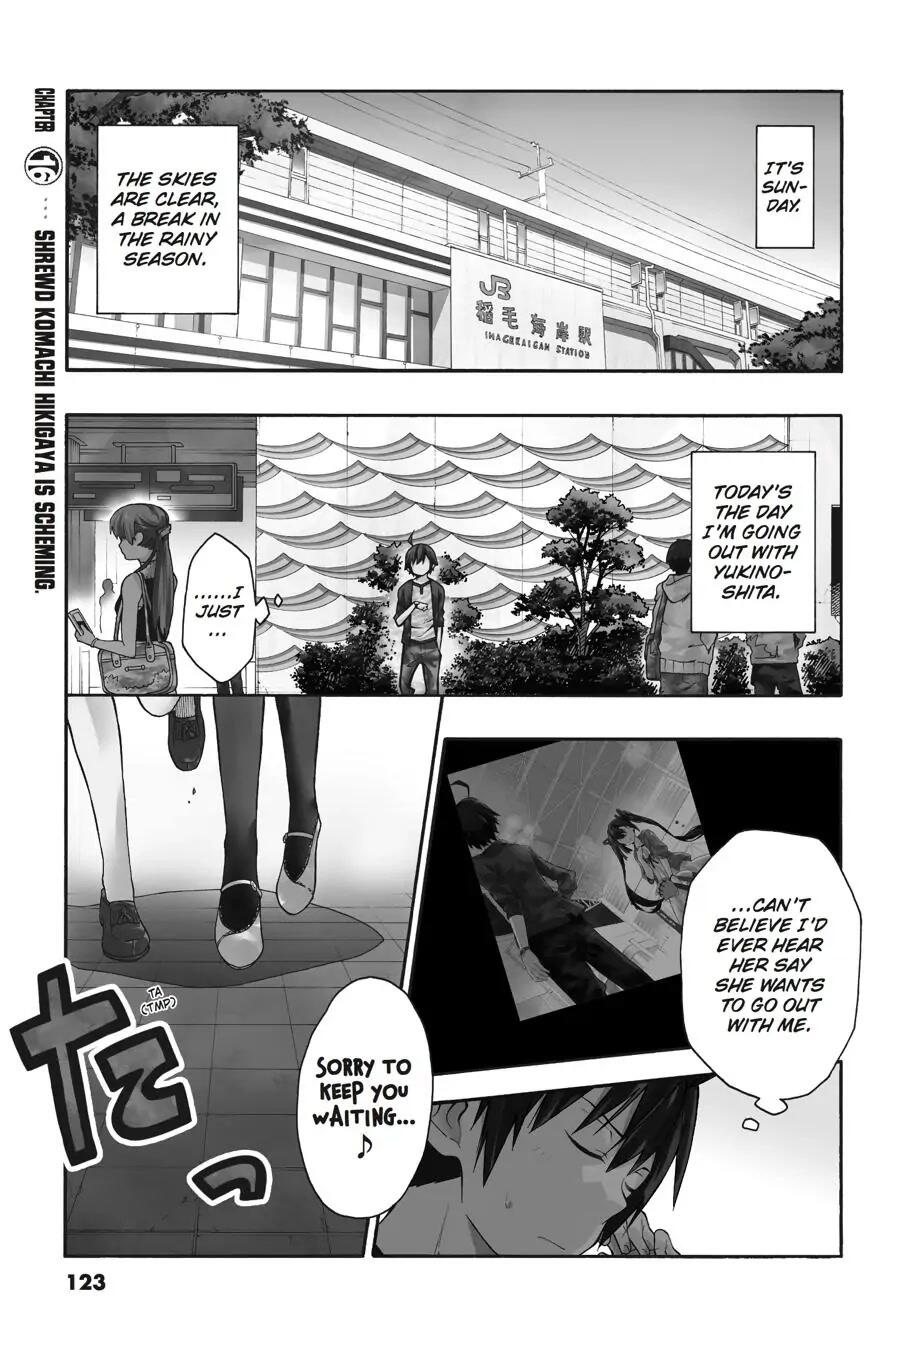 Read Yahari Ore No Seishun Rabukome Wa Machigatte Iru. @ Comic Chapter 14  on Mangakakalot